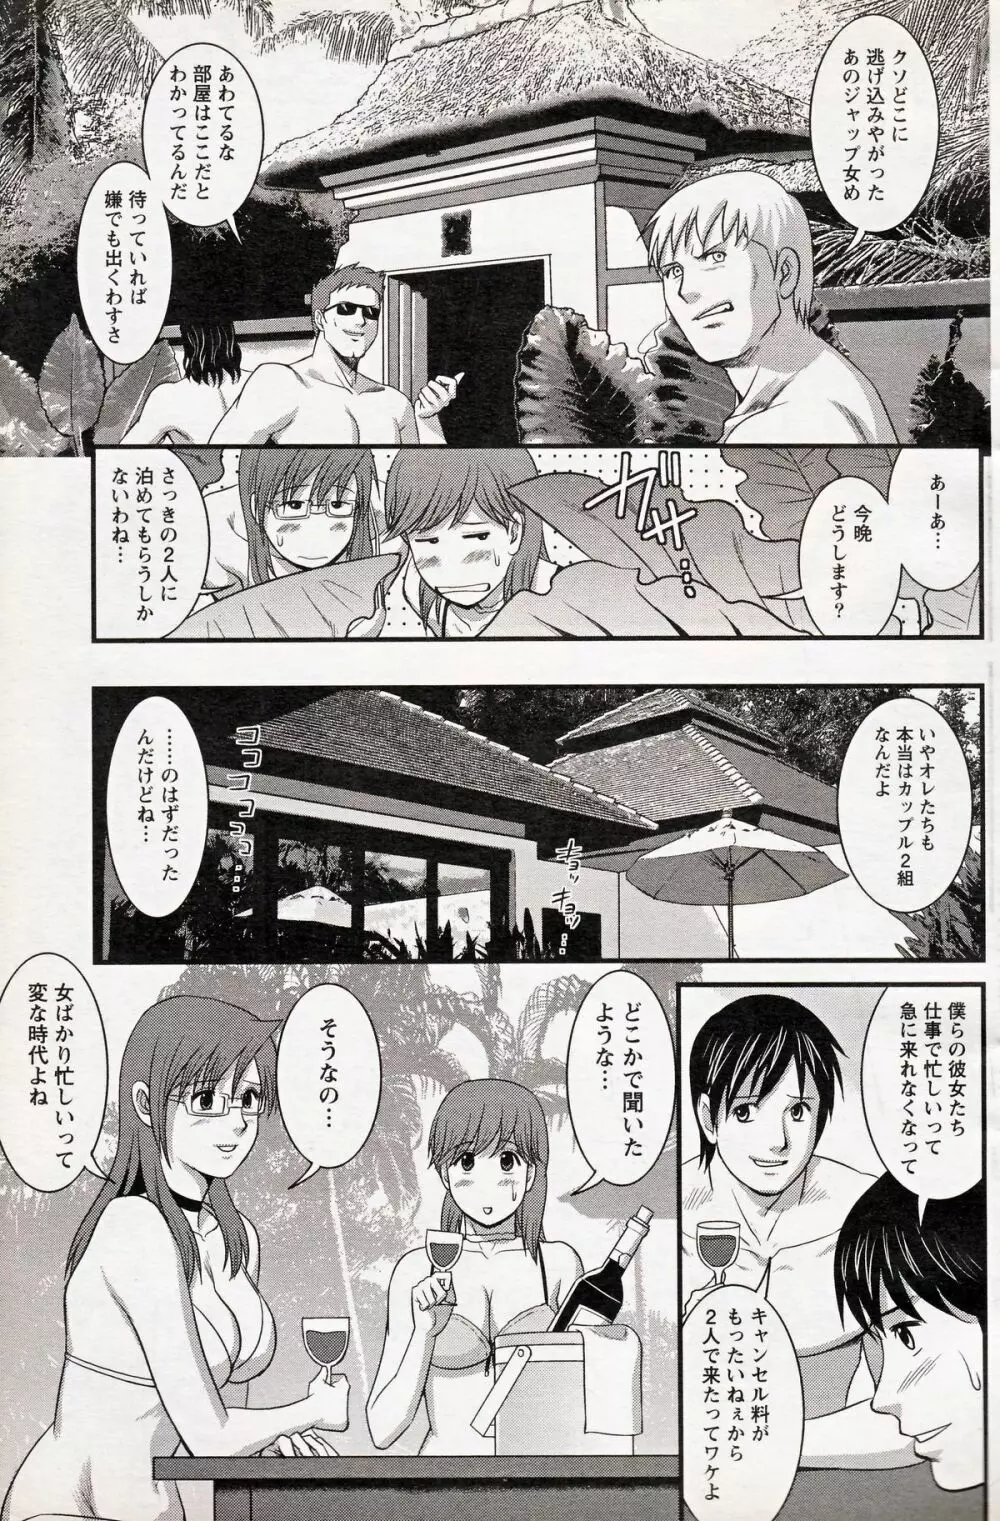 Haken no Muuko-san 16 13ページ